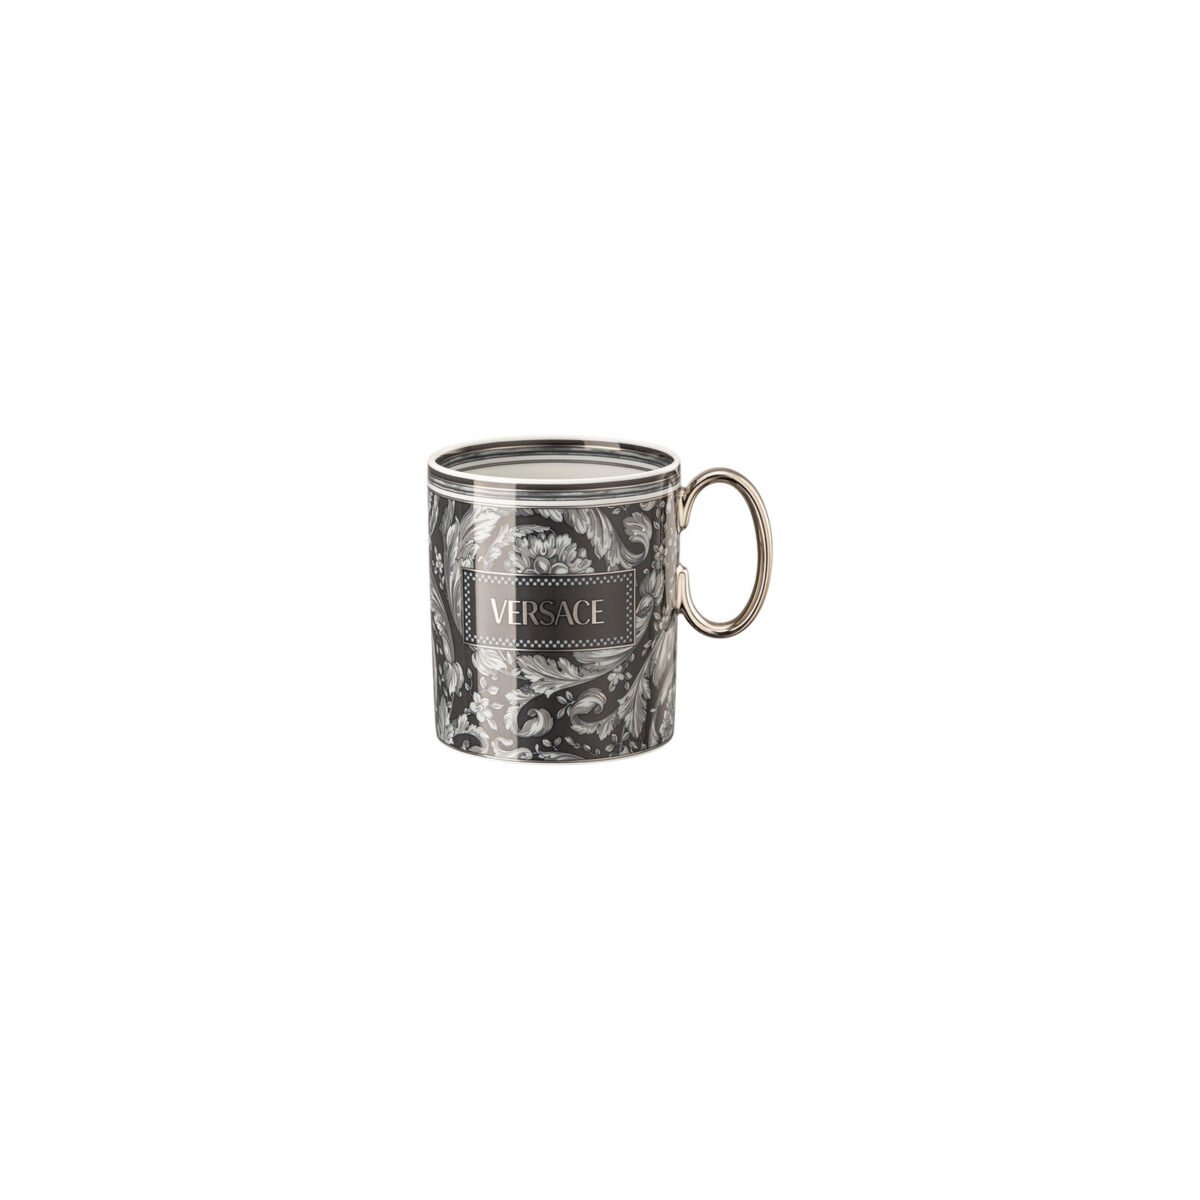 Versace Rosenthal Barocco Barocco Haze mug with handle